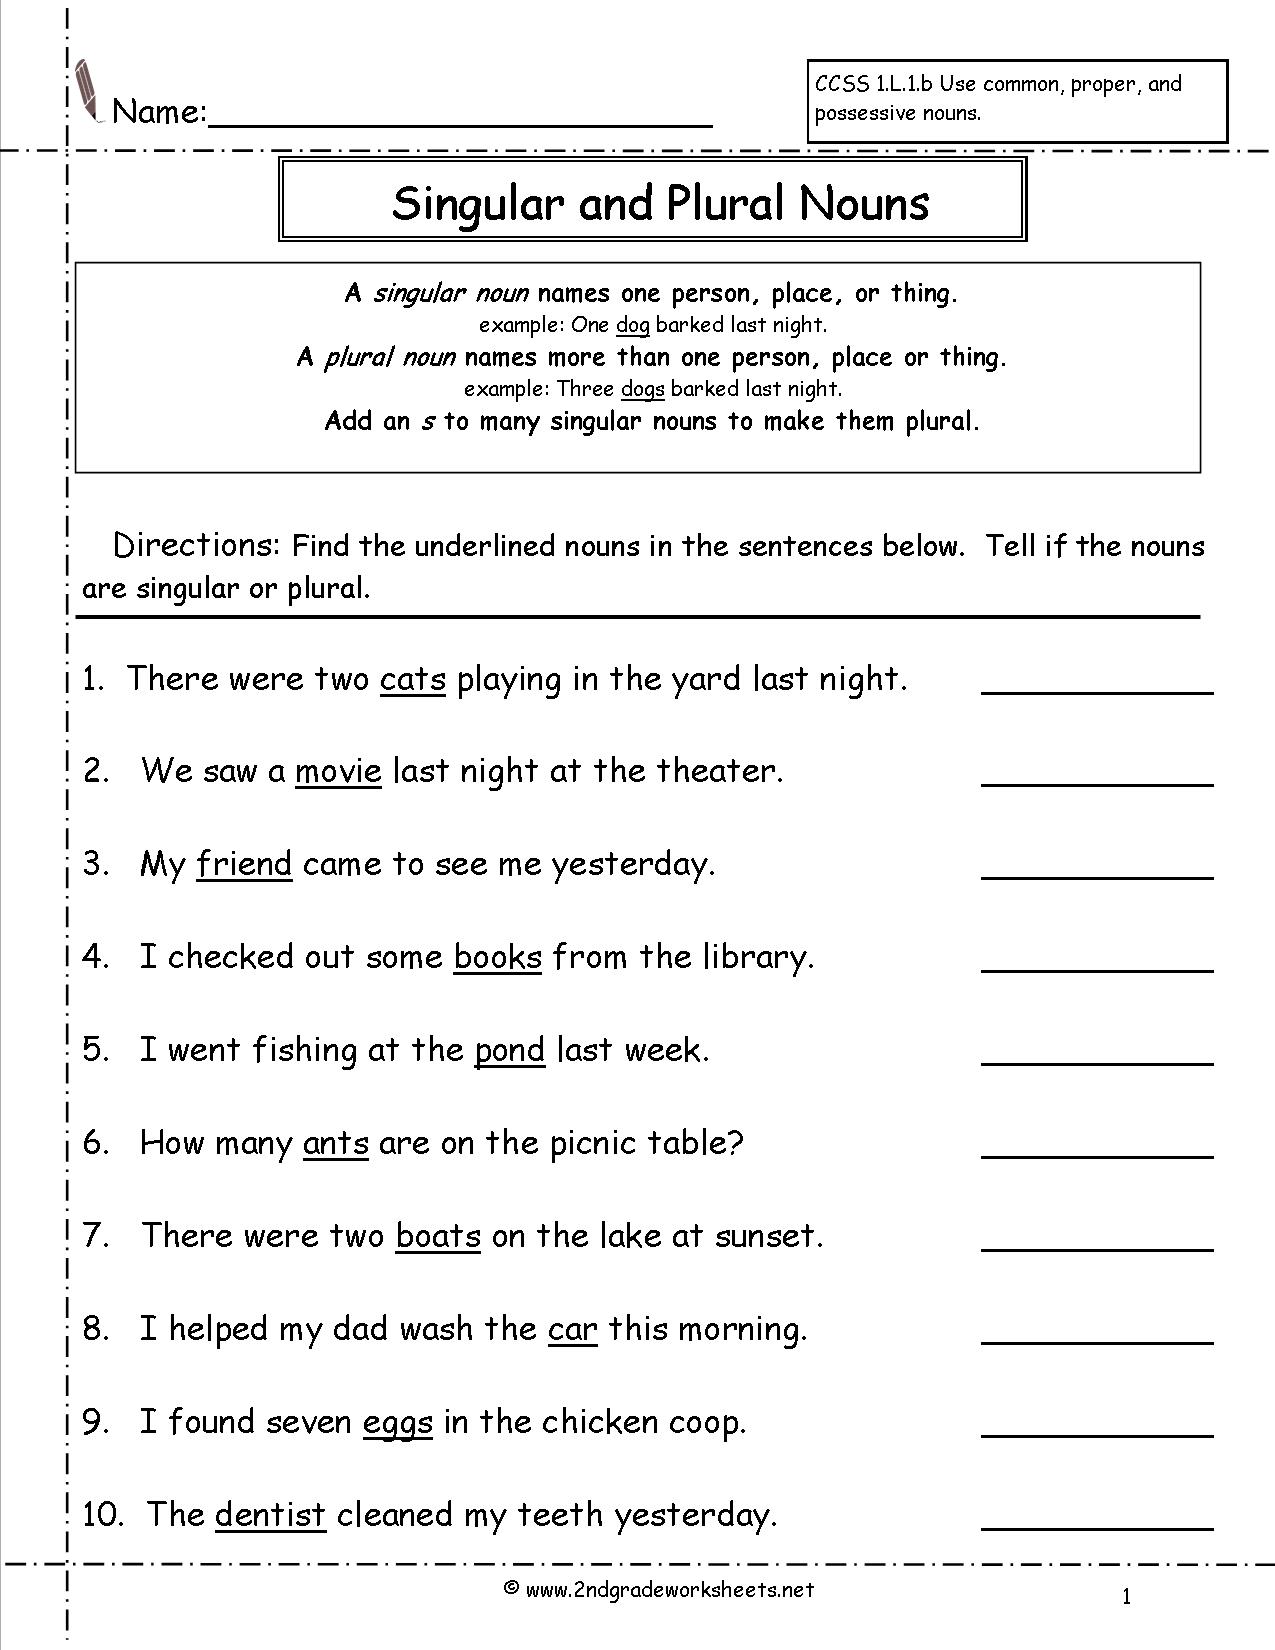 Singular And Plural Nouns Answer Worksheet Spanish